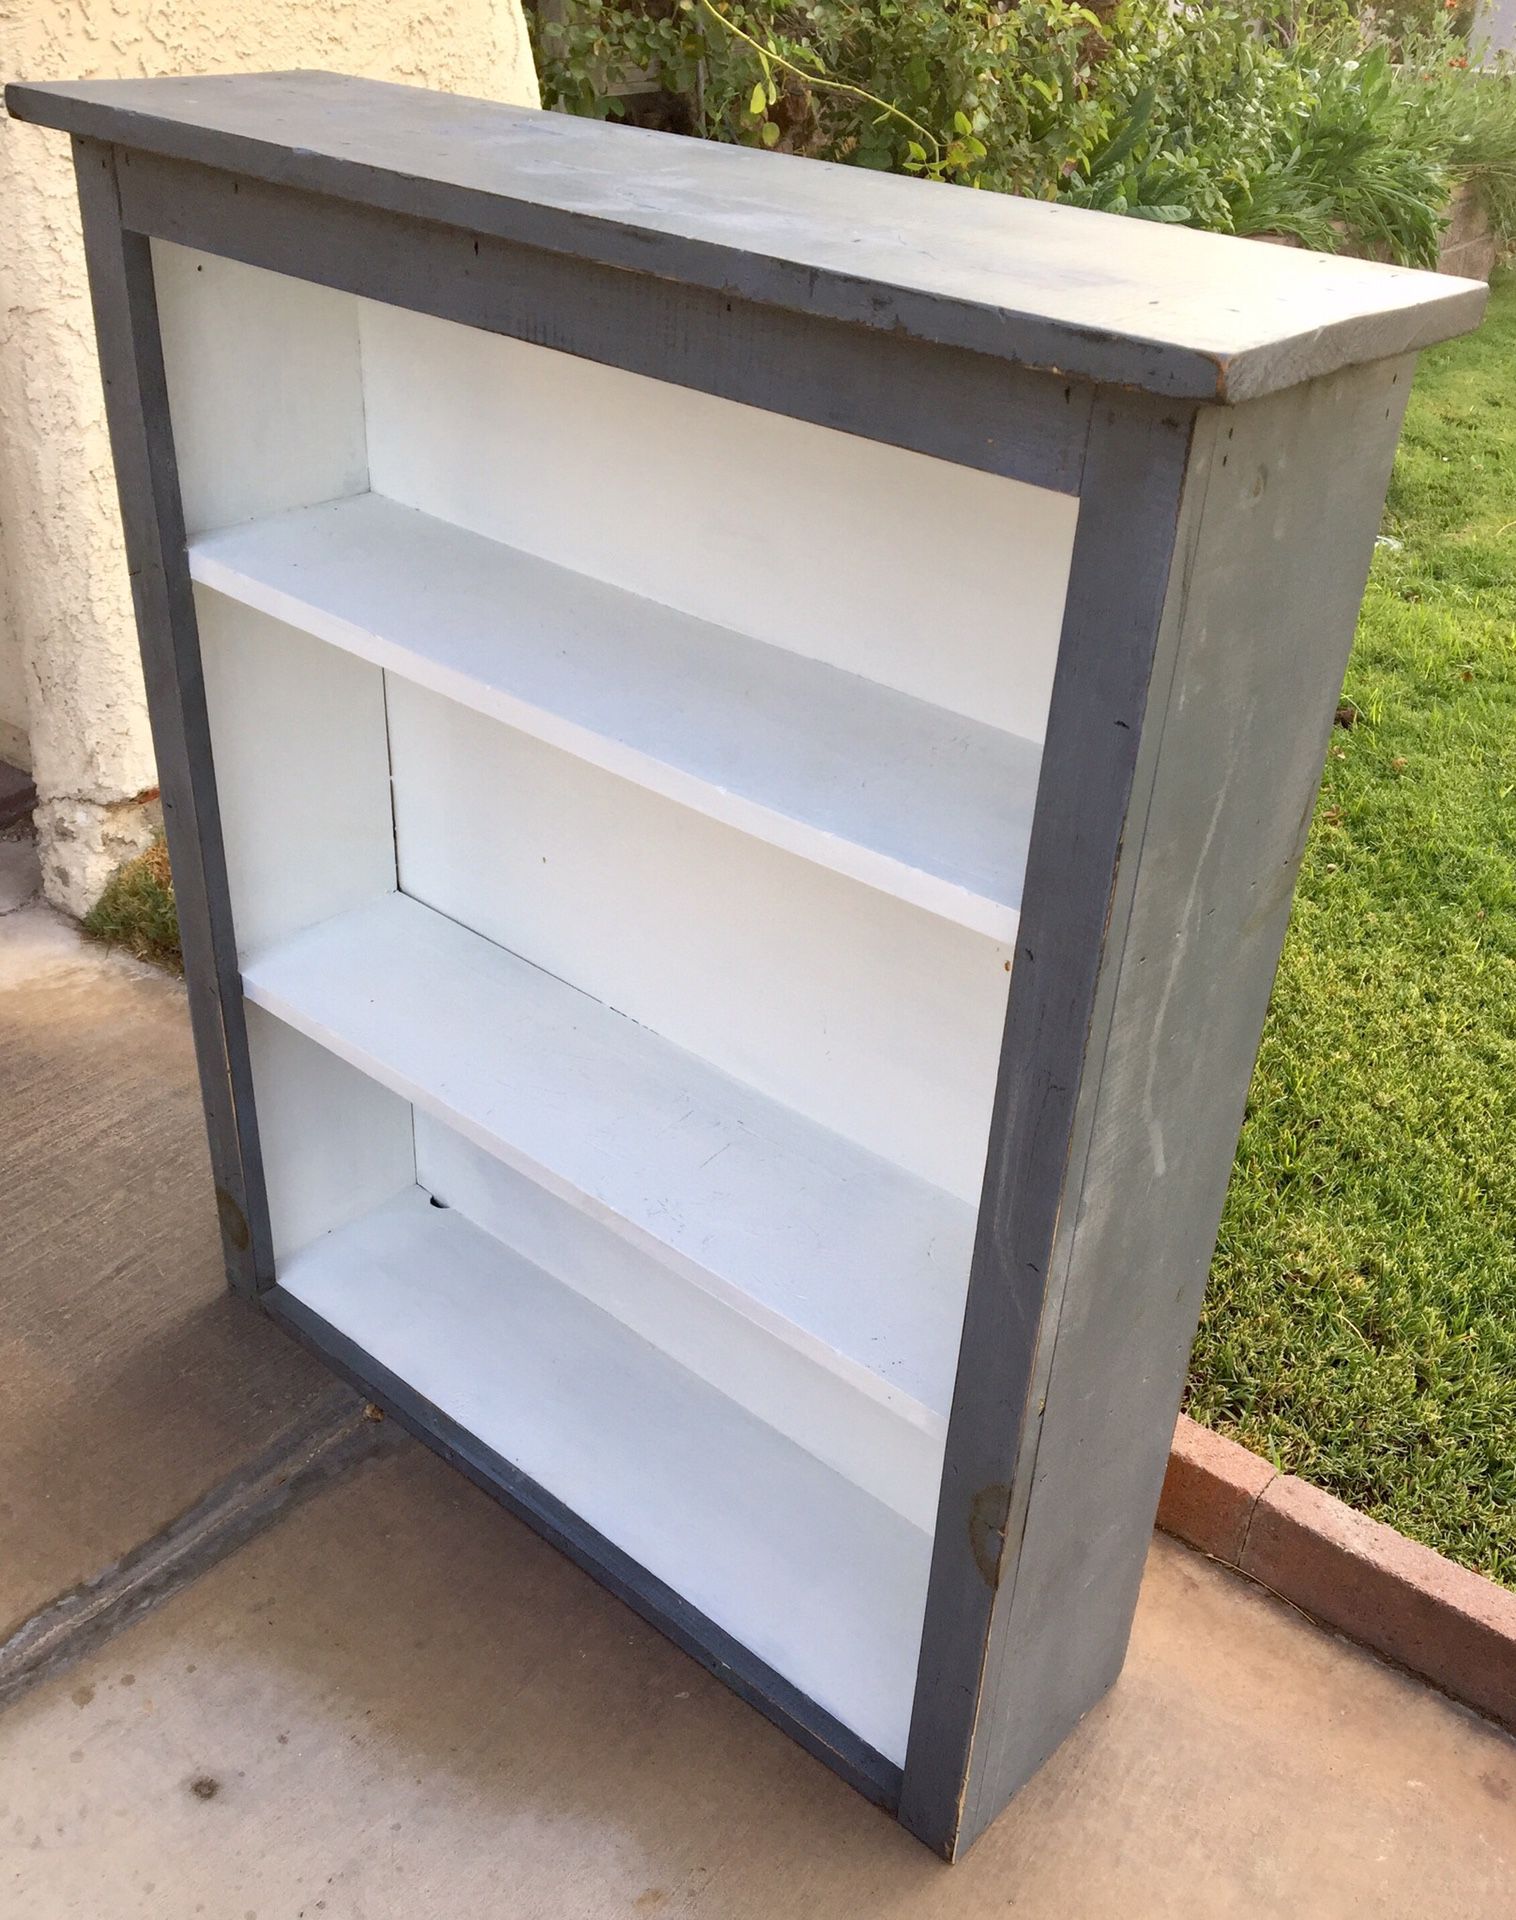 Painted Blue/Gray and White 36” Tall Book Shelf -Washington and Tenaya